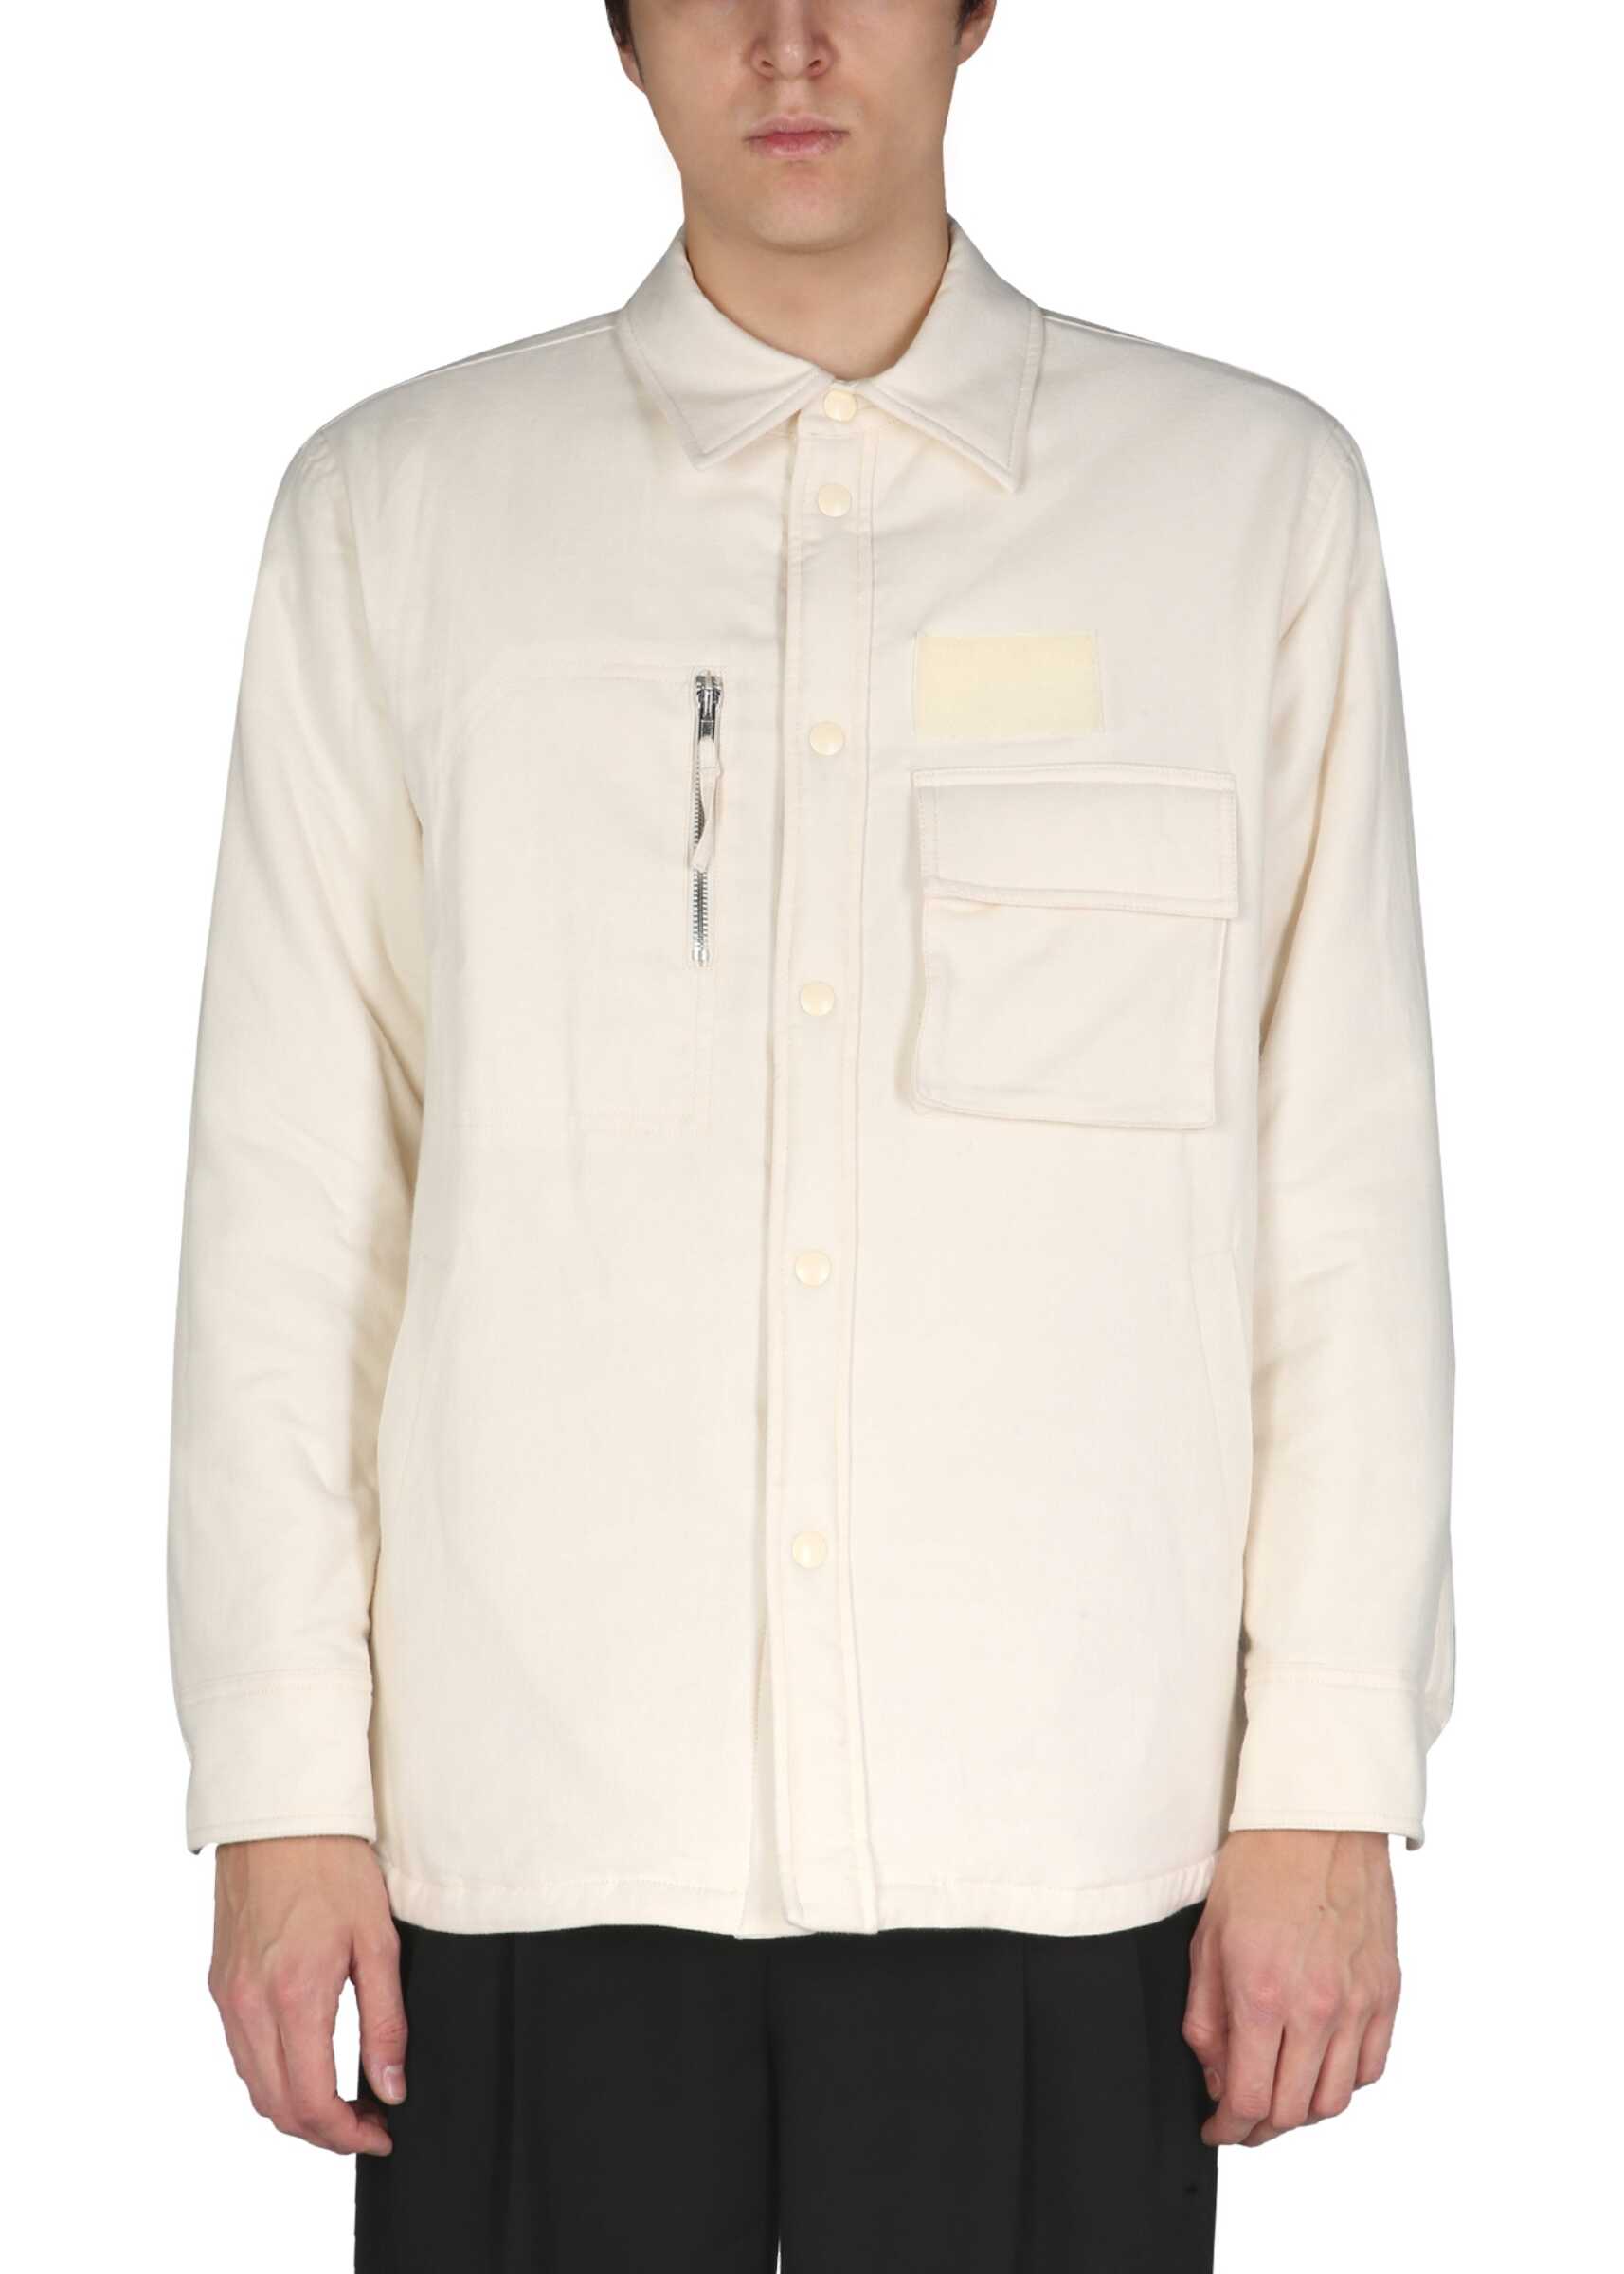 Baie penalizare oriunde  Jachete HELMUT LANG Shirt Jacket WHITE Barbati (BM8736948) - Boutique Mall  Romania